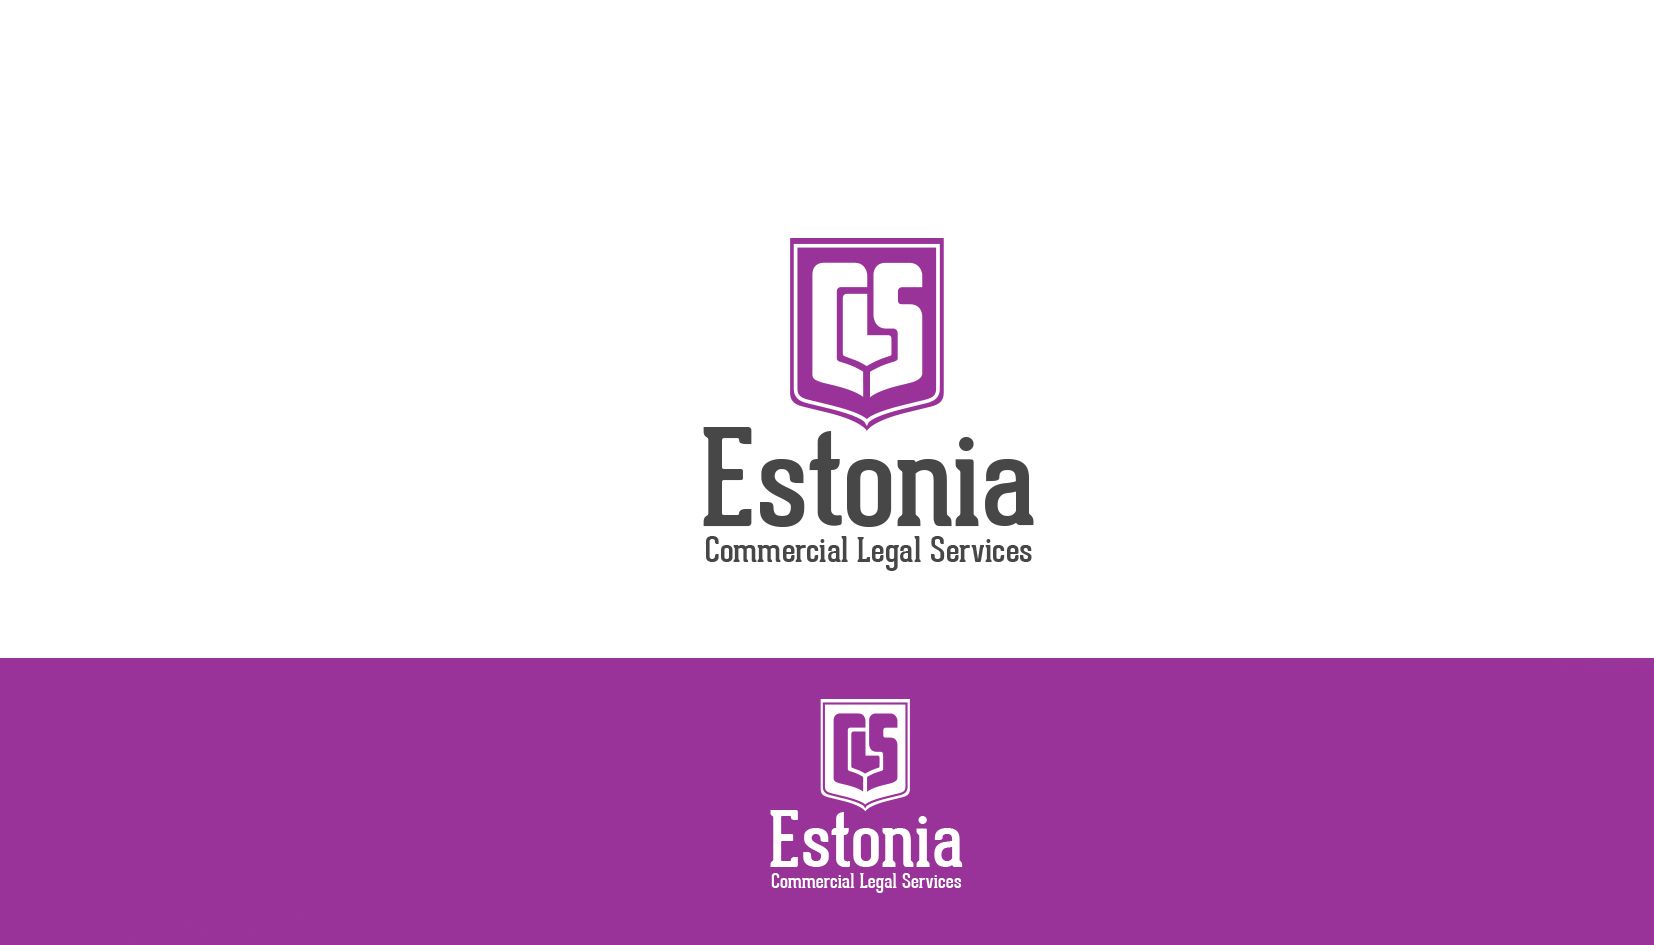 Логотип для CLSEstonia - дизайнер andblin61